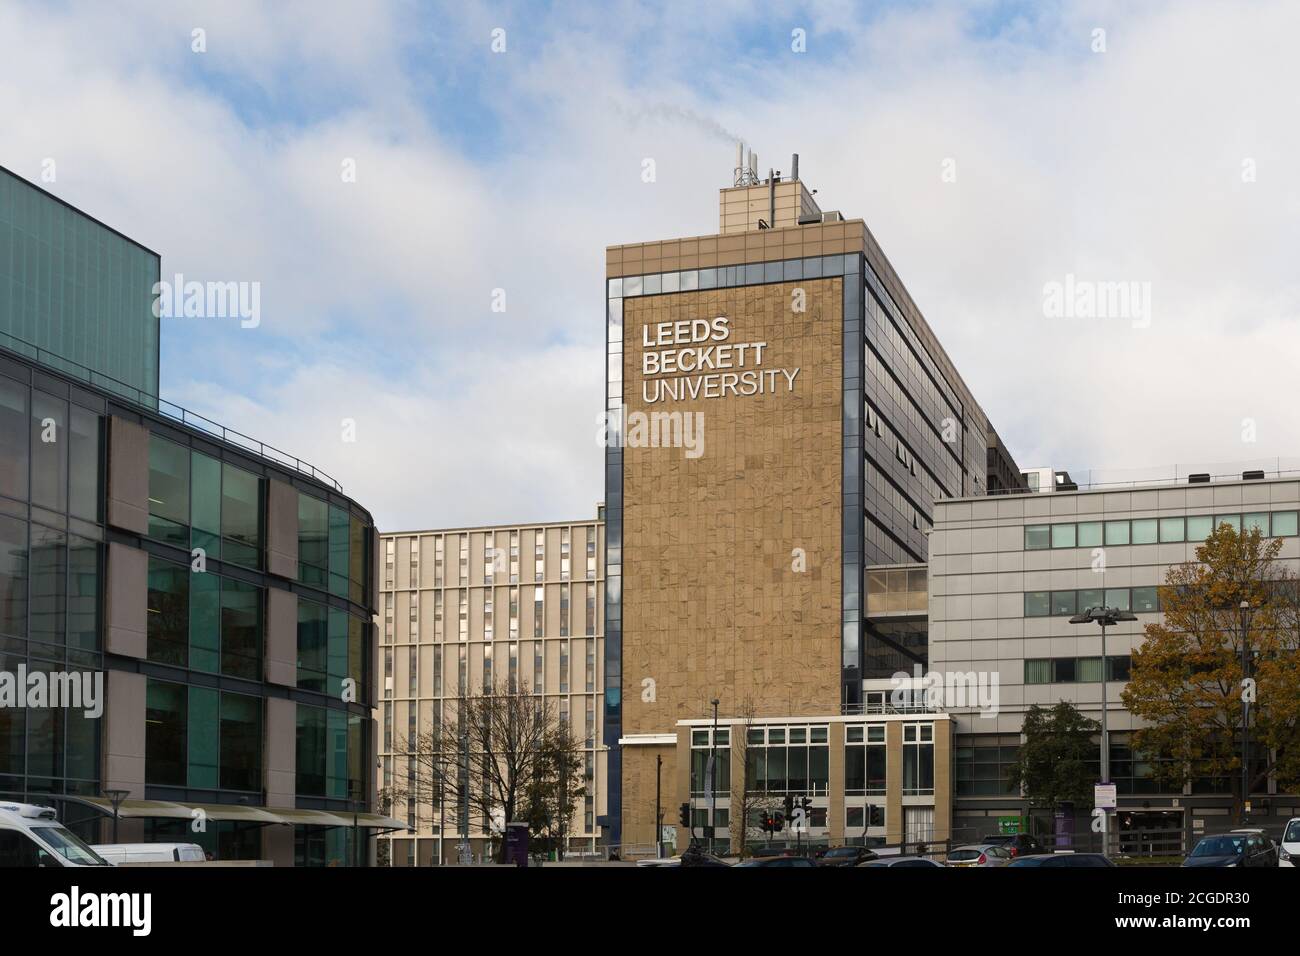 Campus de l'Université Leeds Beckett Banque D'Images